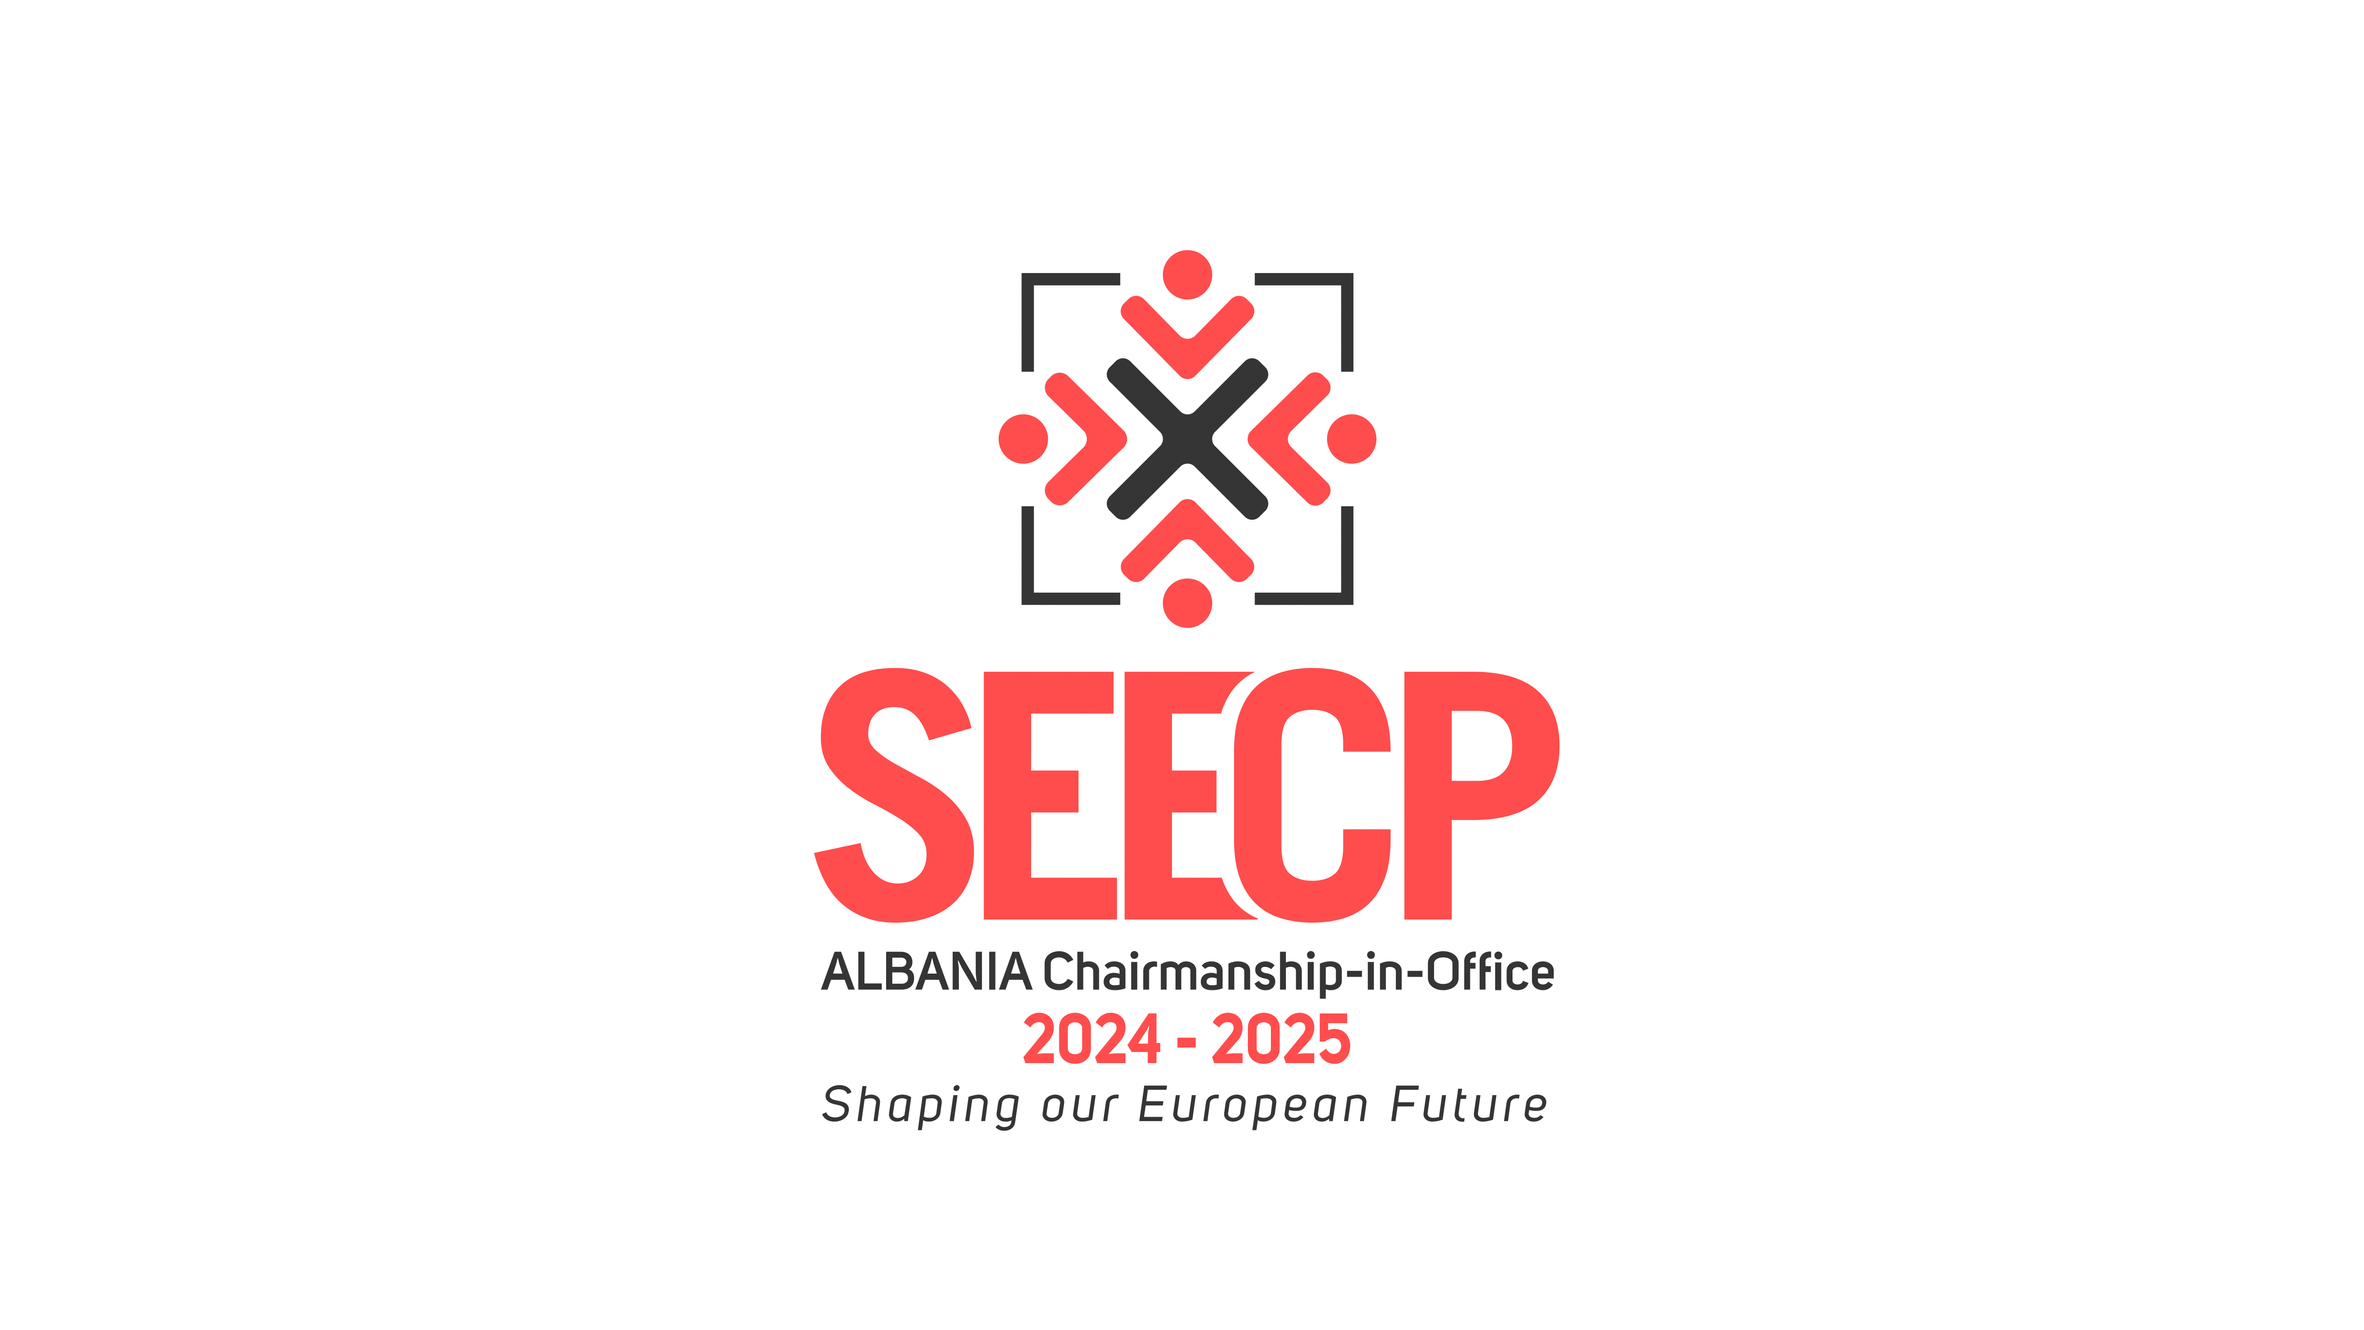 Tirana SEECP Chairmanship-in-Office 2024-2025